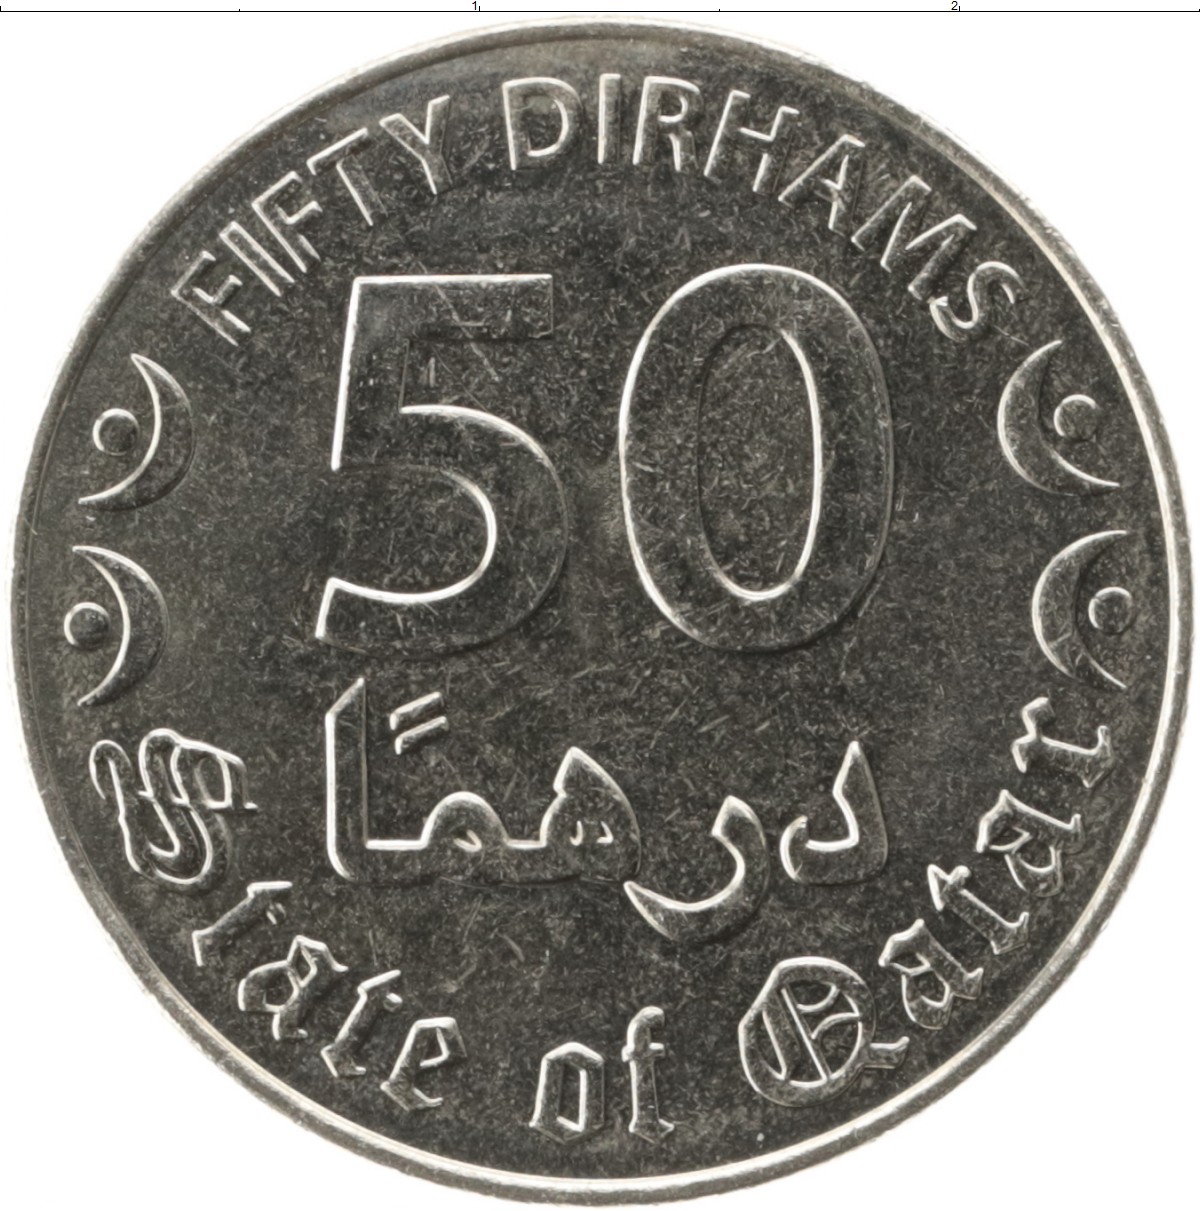 69 дирхам. Монеты Катара. Дирхамы монеты. Монета Катар 2020 года. Арабская монета State of Qatar.